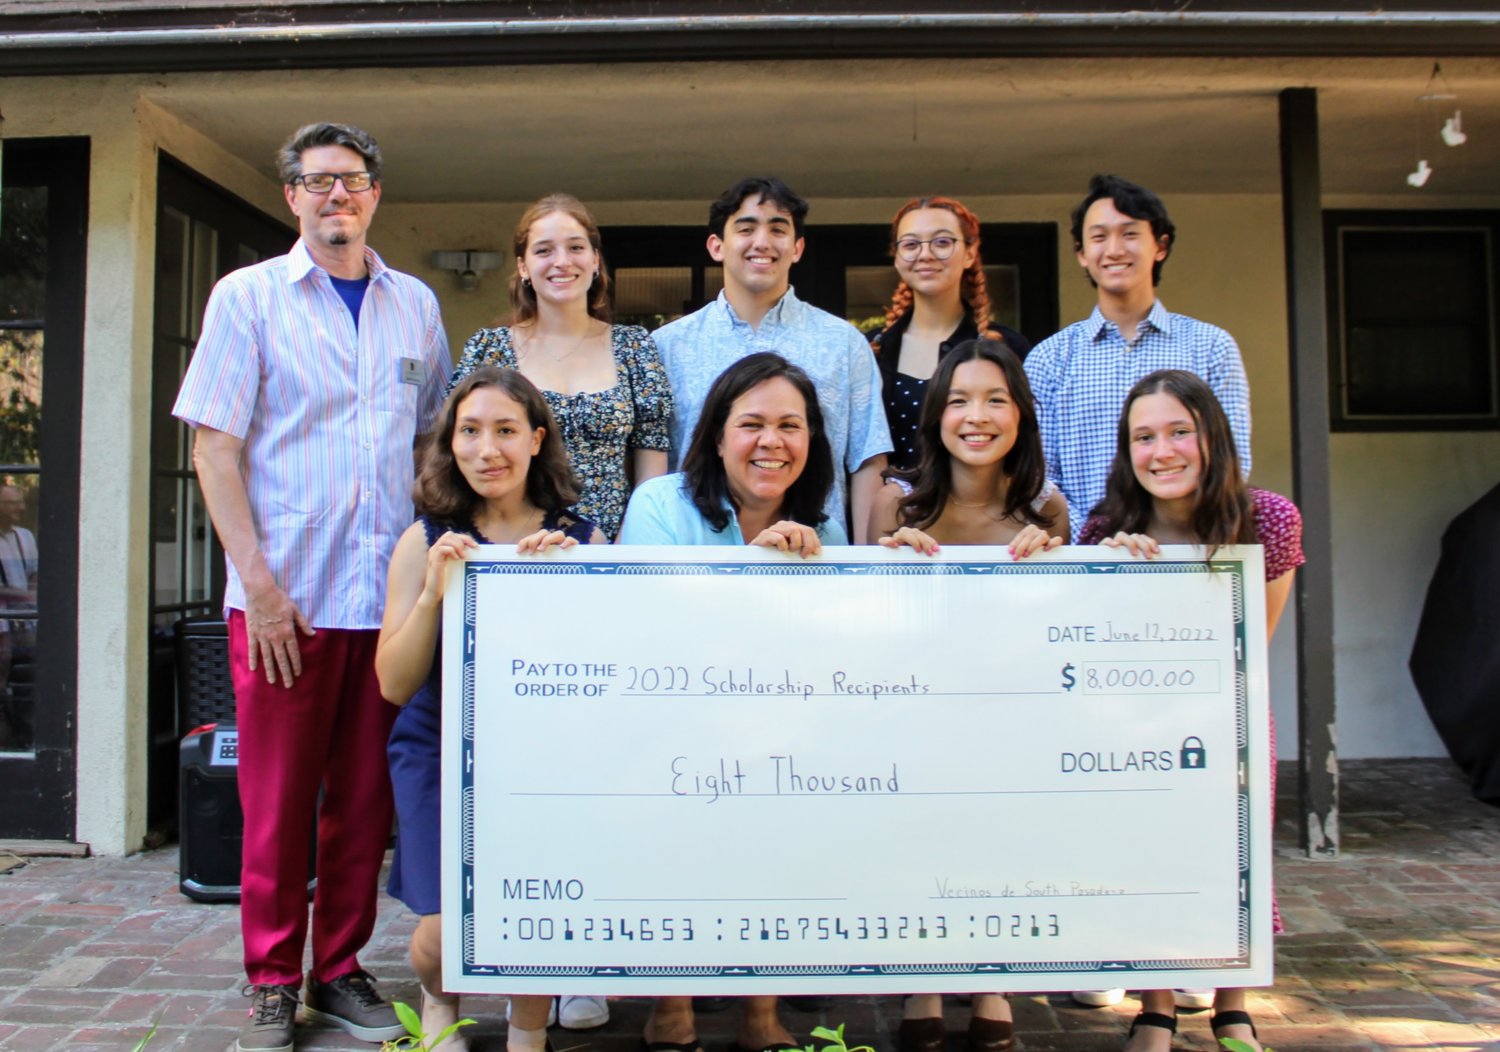 Vicenos de South Pasadena |  Otorga $8000 en becas a ocho ex-alumnos |  Sur de Pasadena